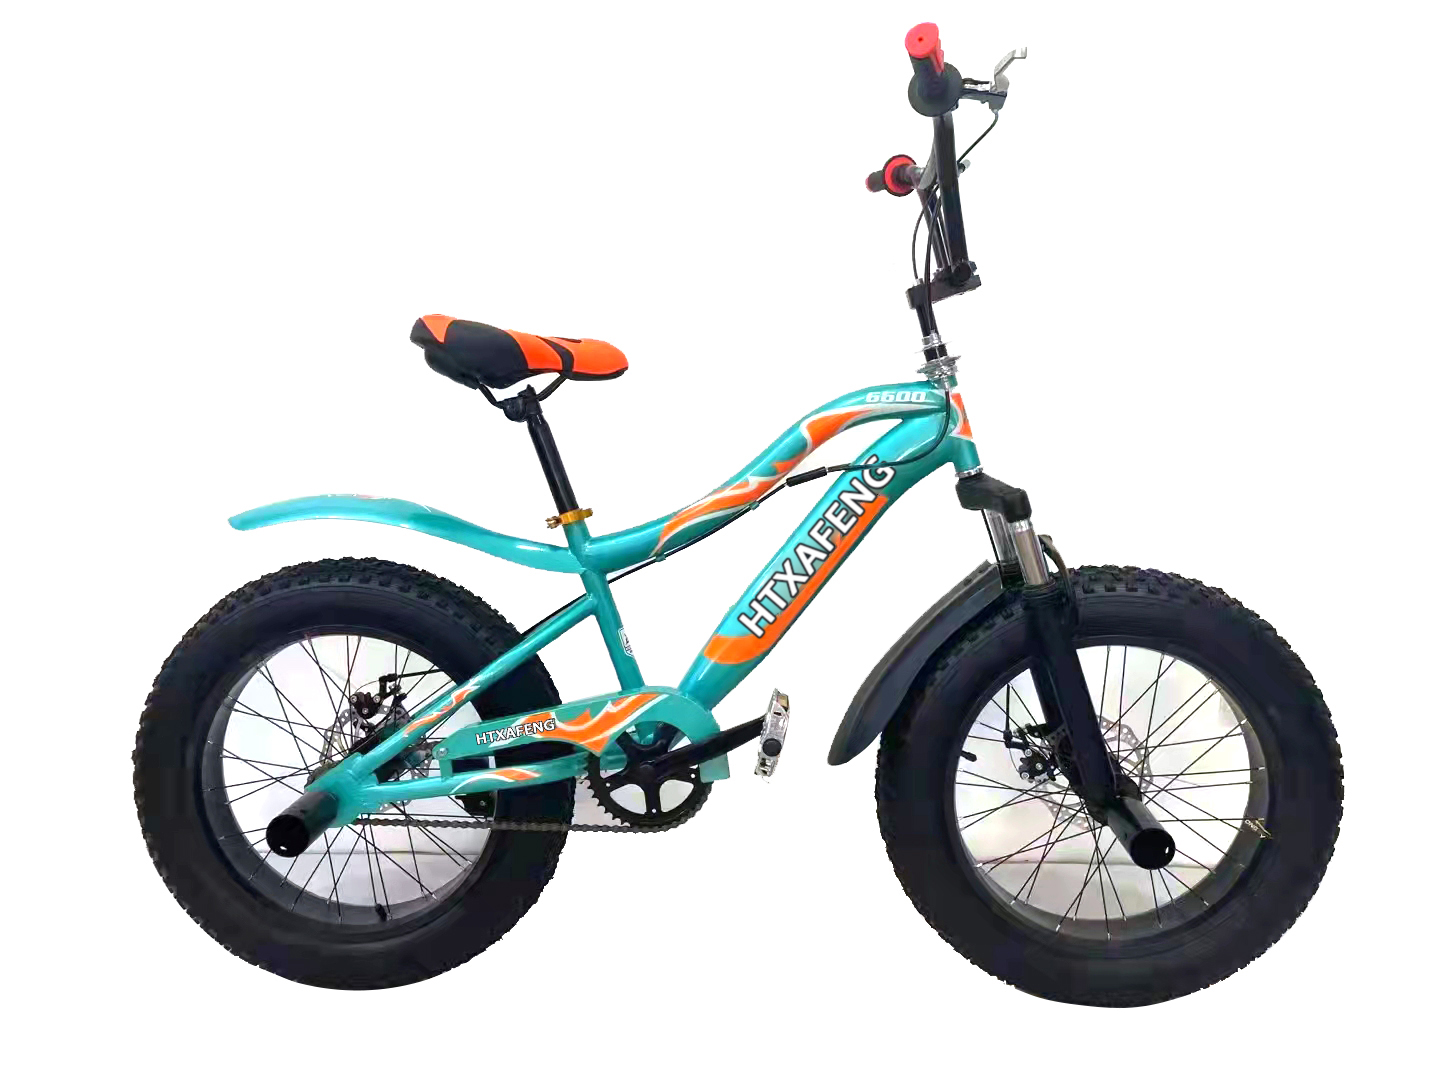 2022 new Hot sale bicycle factory direct mountain bike kids mountain bike with kickstand